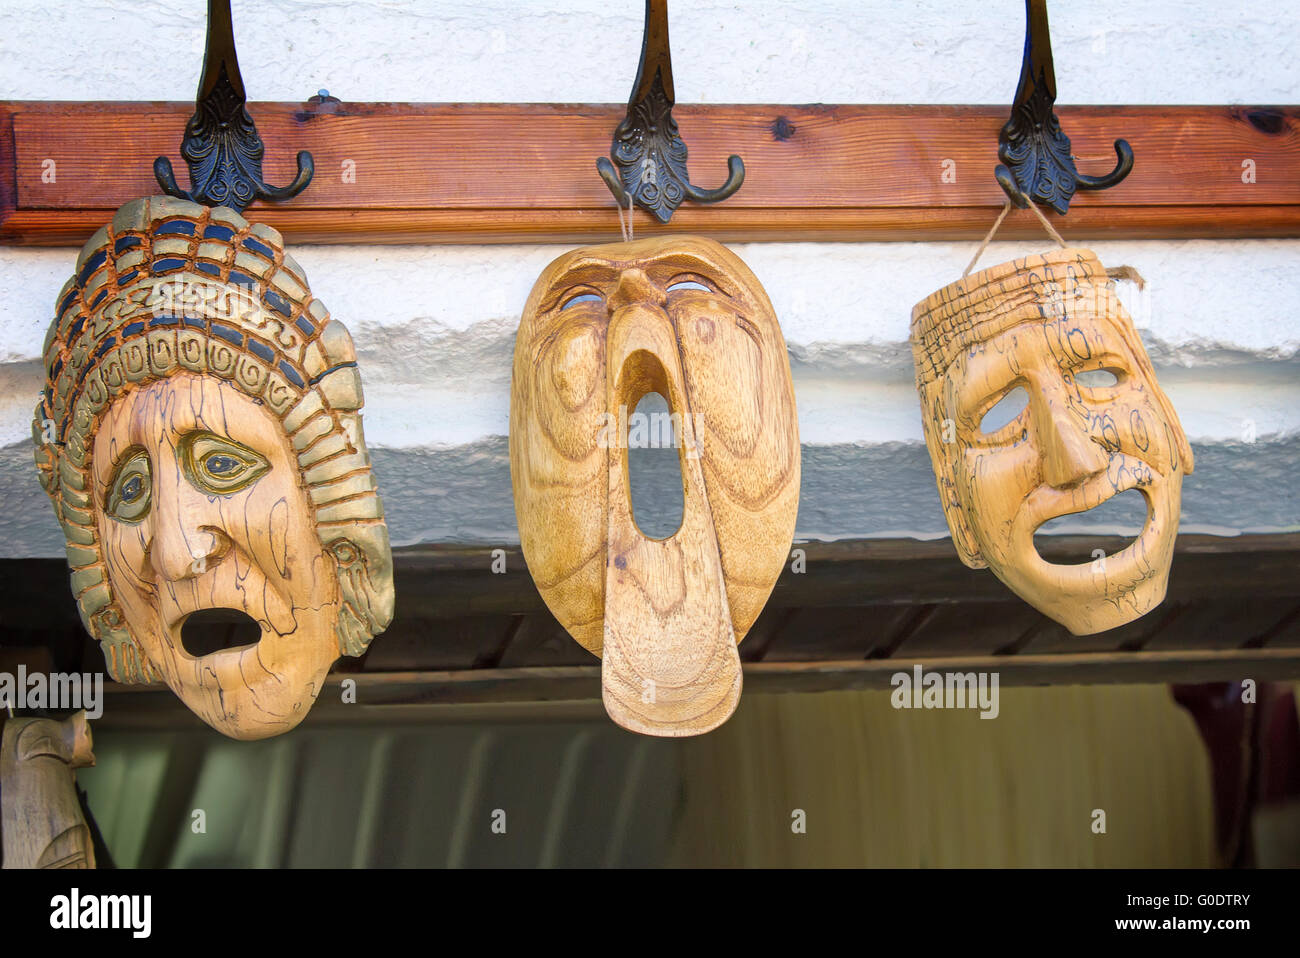 Souvenirs : masks made of wood, symbolizing human Stock Photo